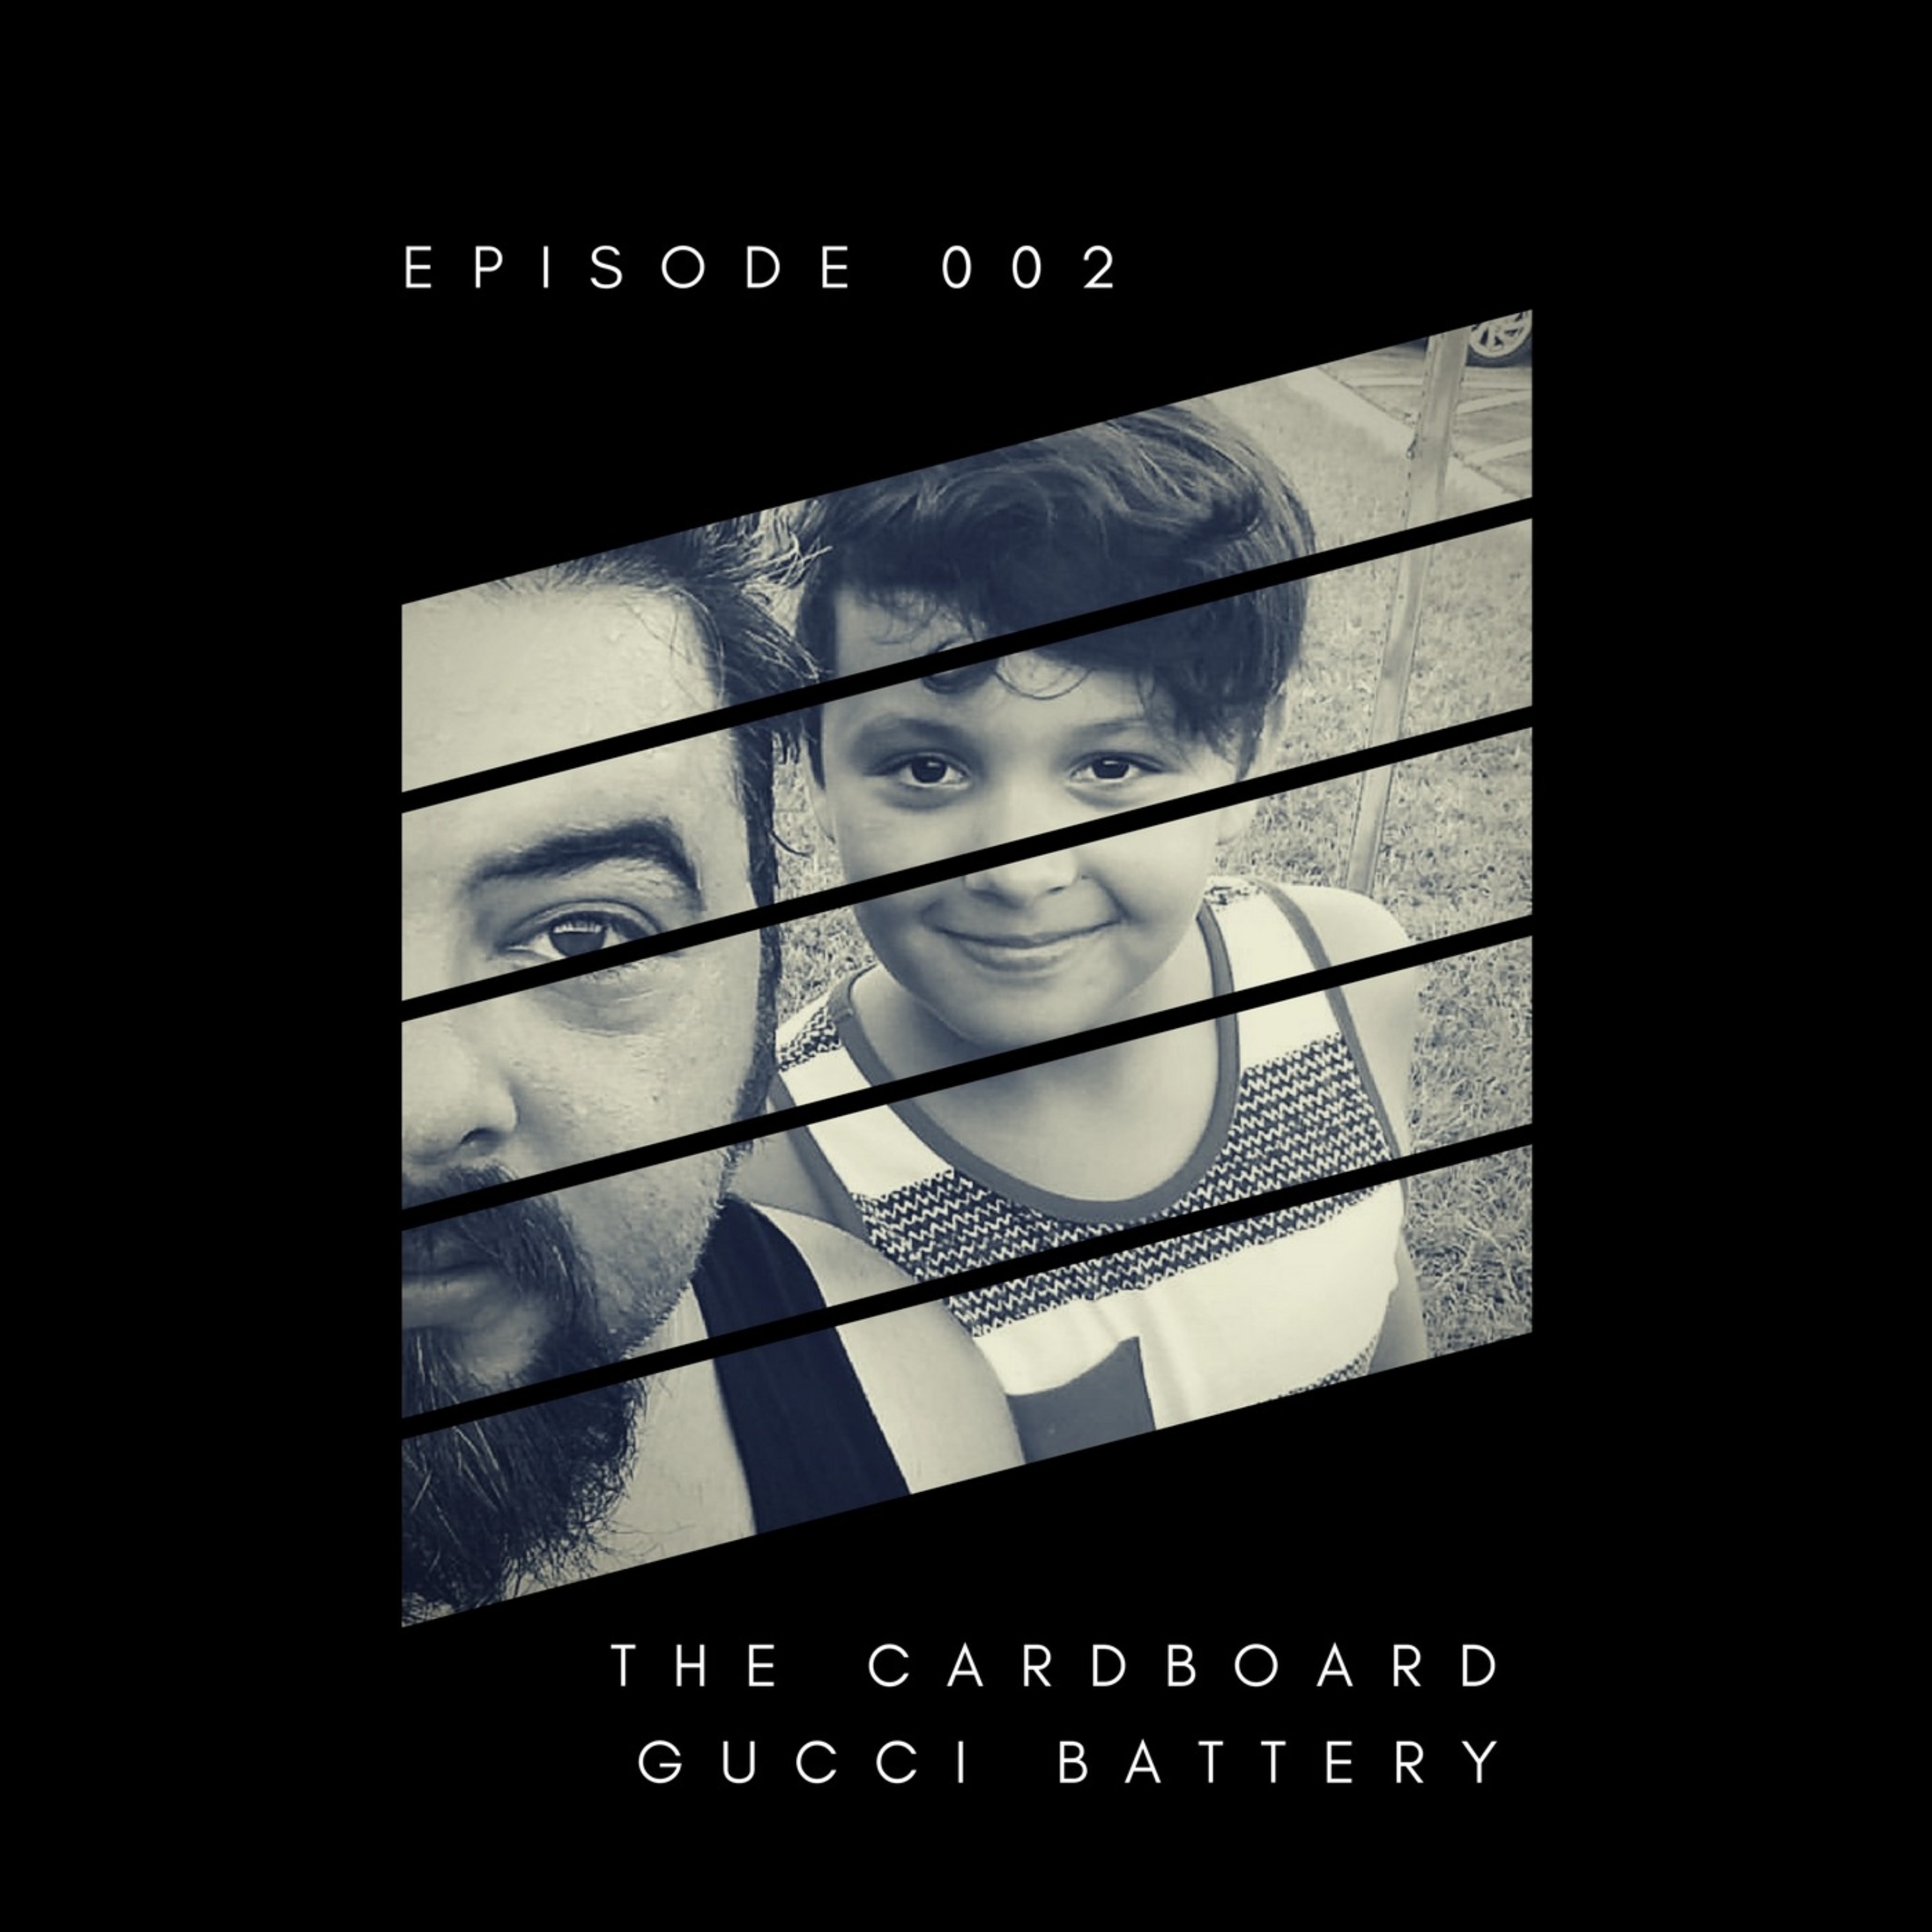 The Cardboard Gucci Battery